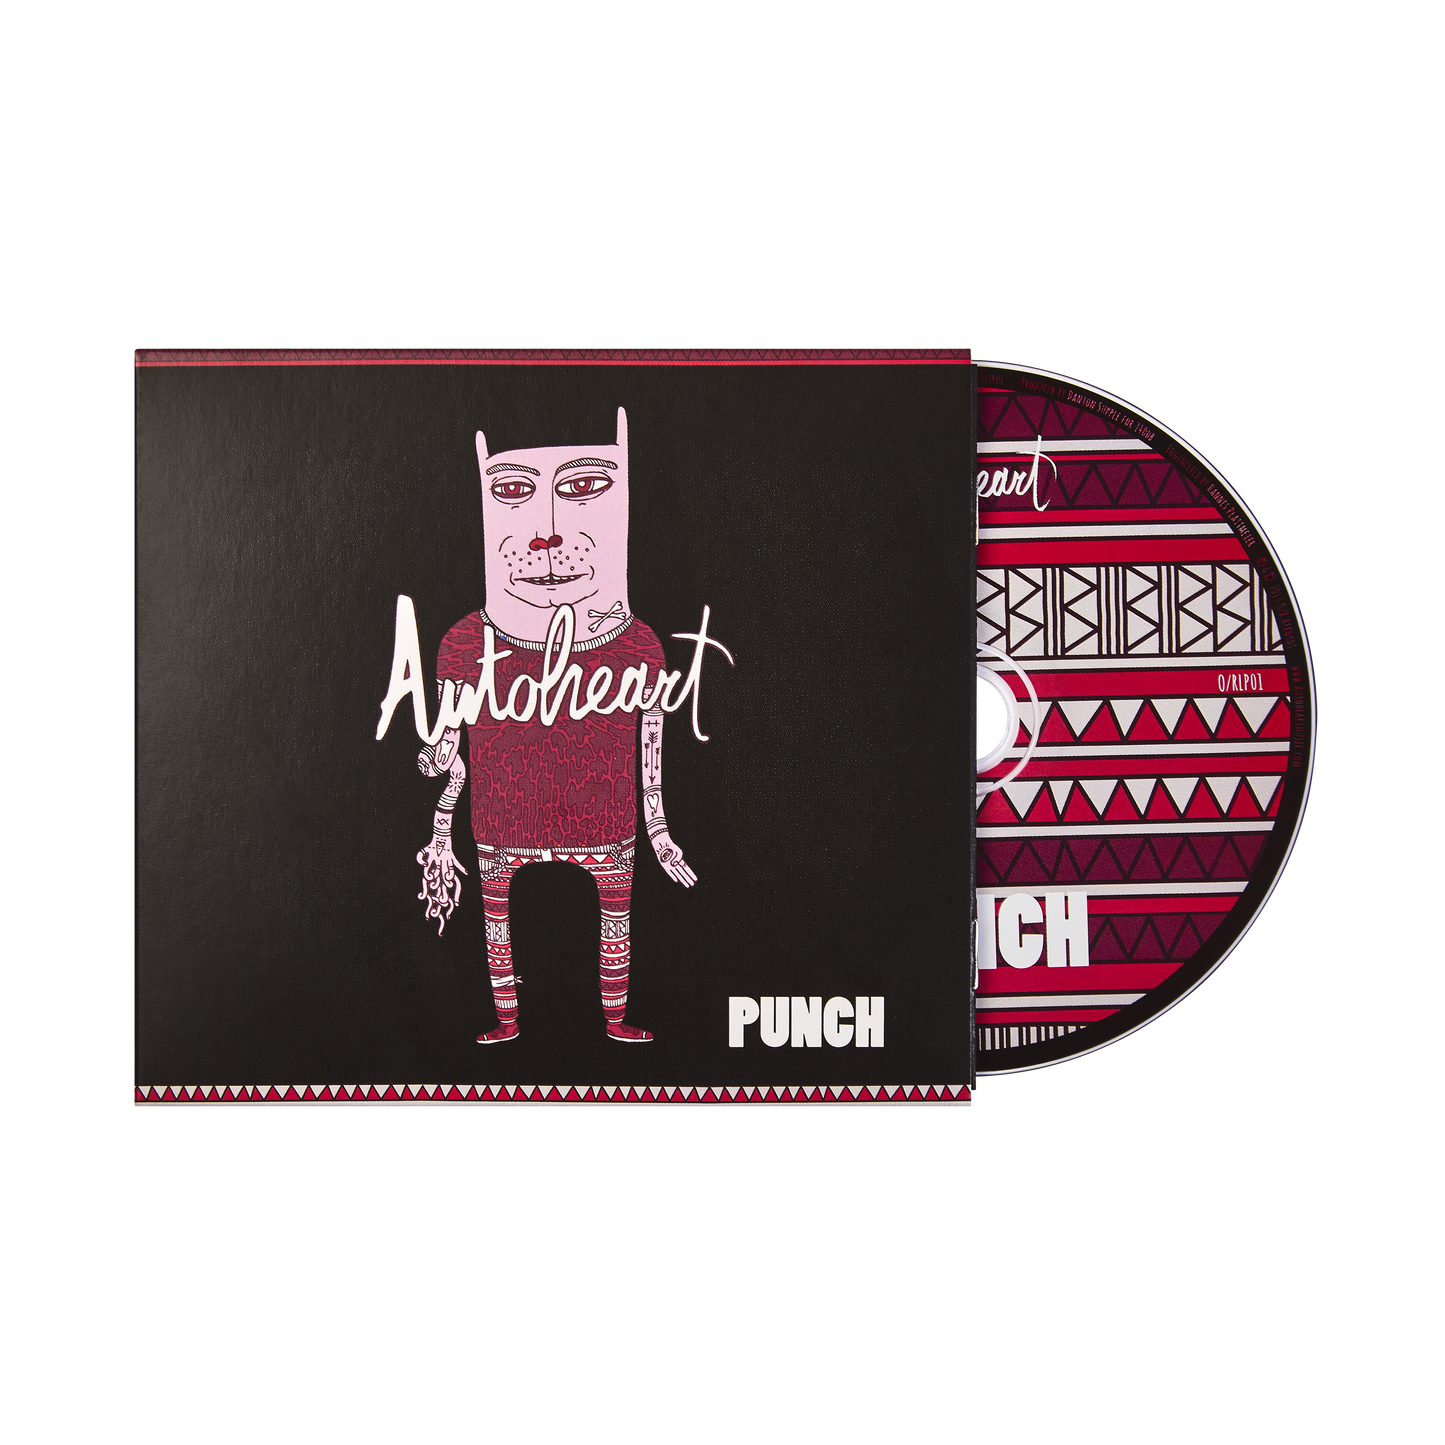 Punch - CD + Digital Download